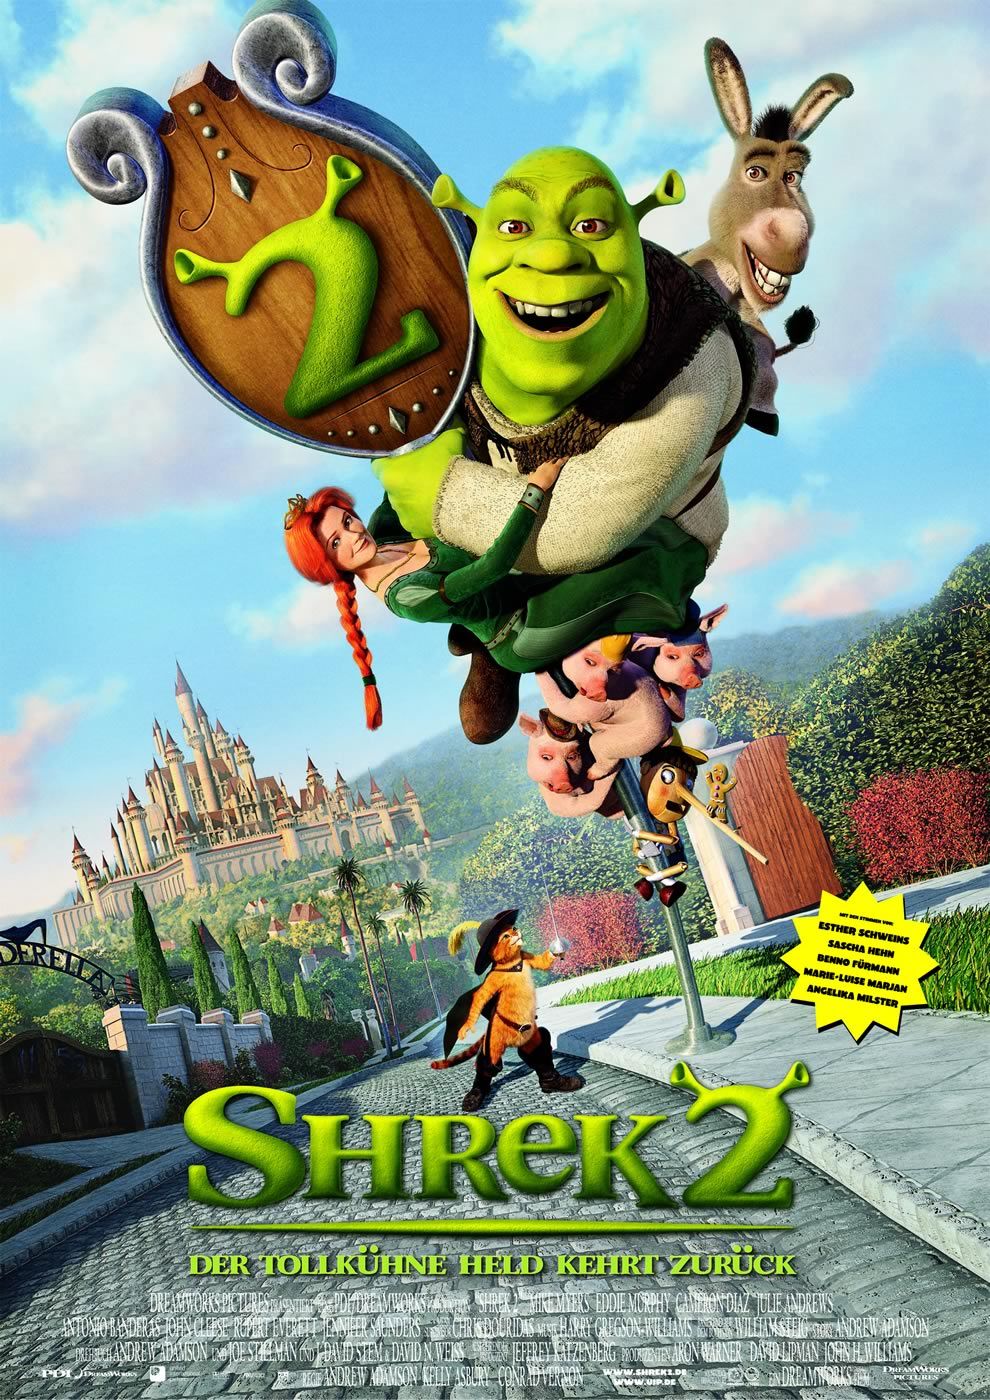 Shrek 2 is a 2004 American computer-animated fantasy comedy film produced by DreamWorks Animation. - Shrek